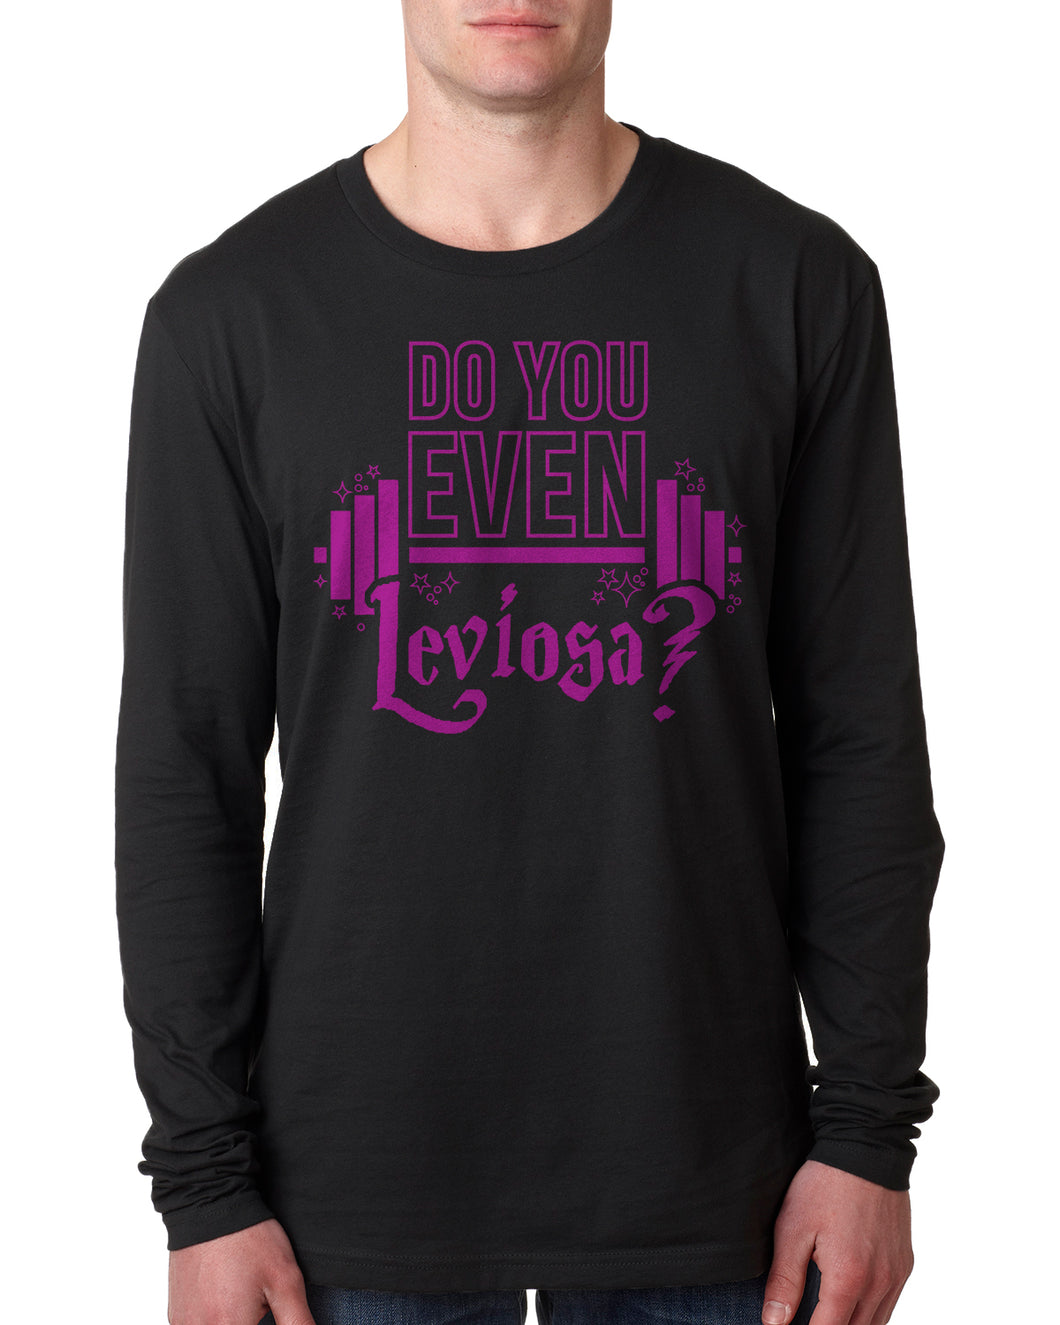 Do You Even Leviosa? Long Sleeve Men's Shirt